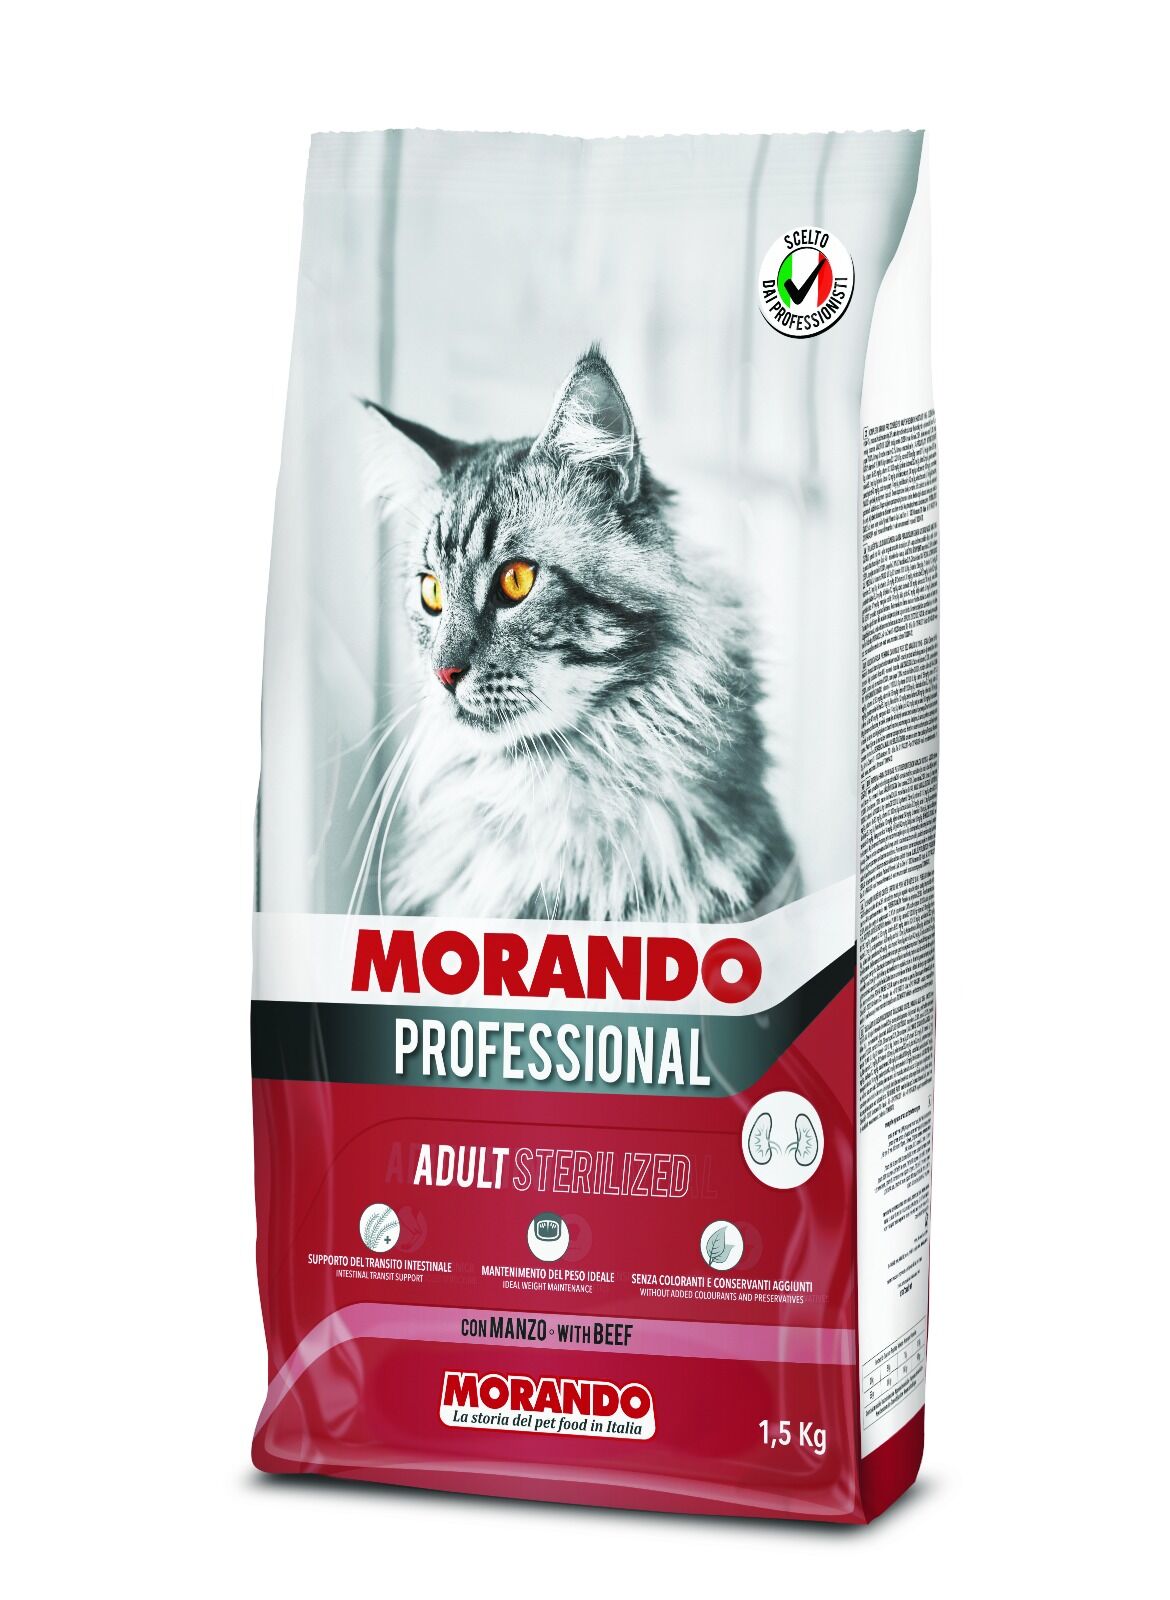 Morando Biftekli Kısır Kedi Maması 1.5kg